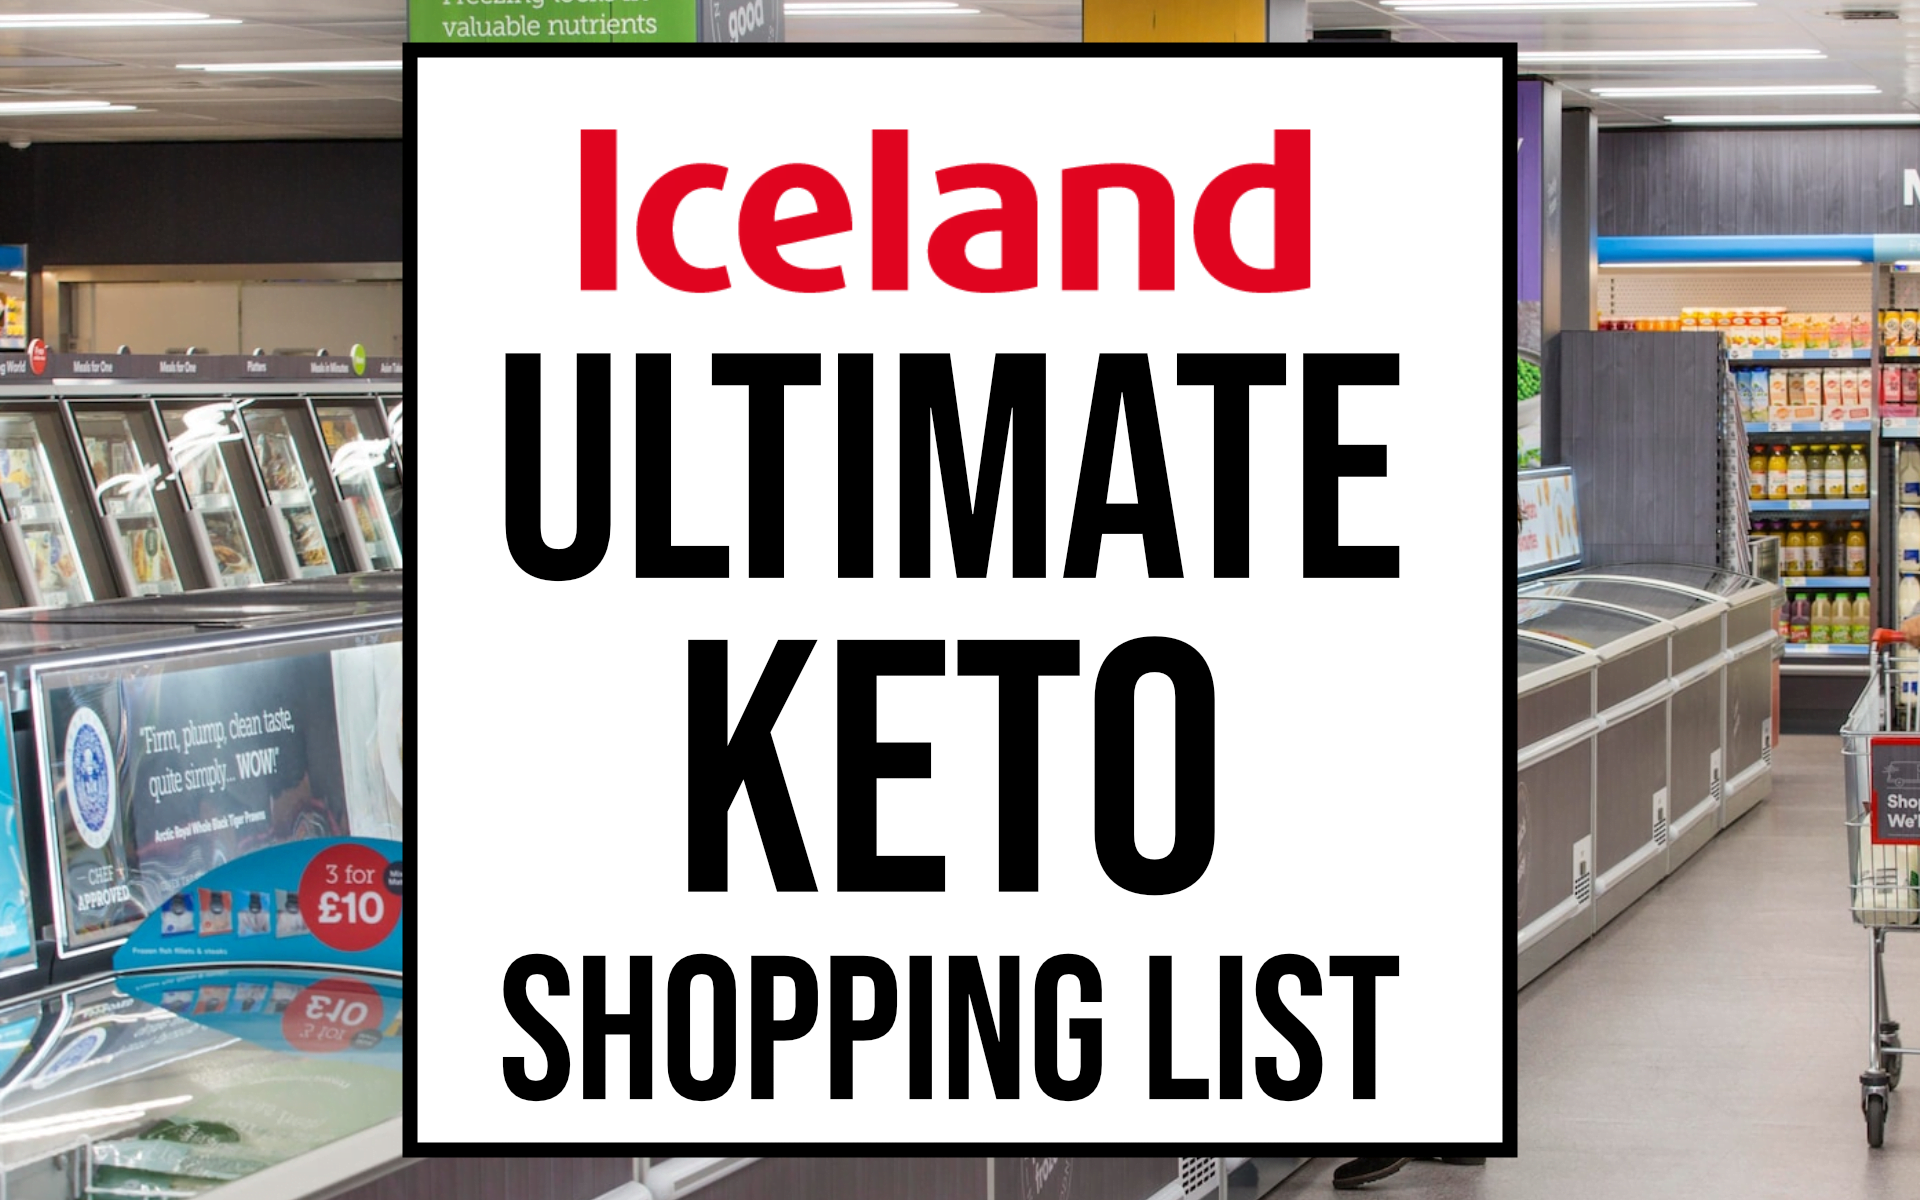 Iceland ultimate keto shop